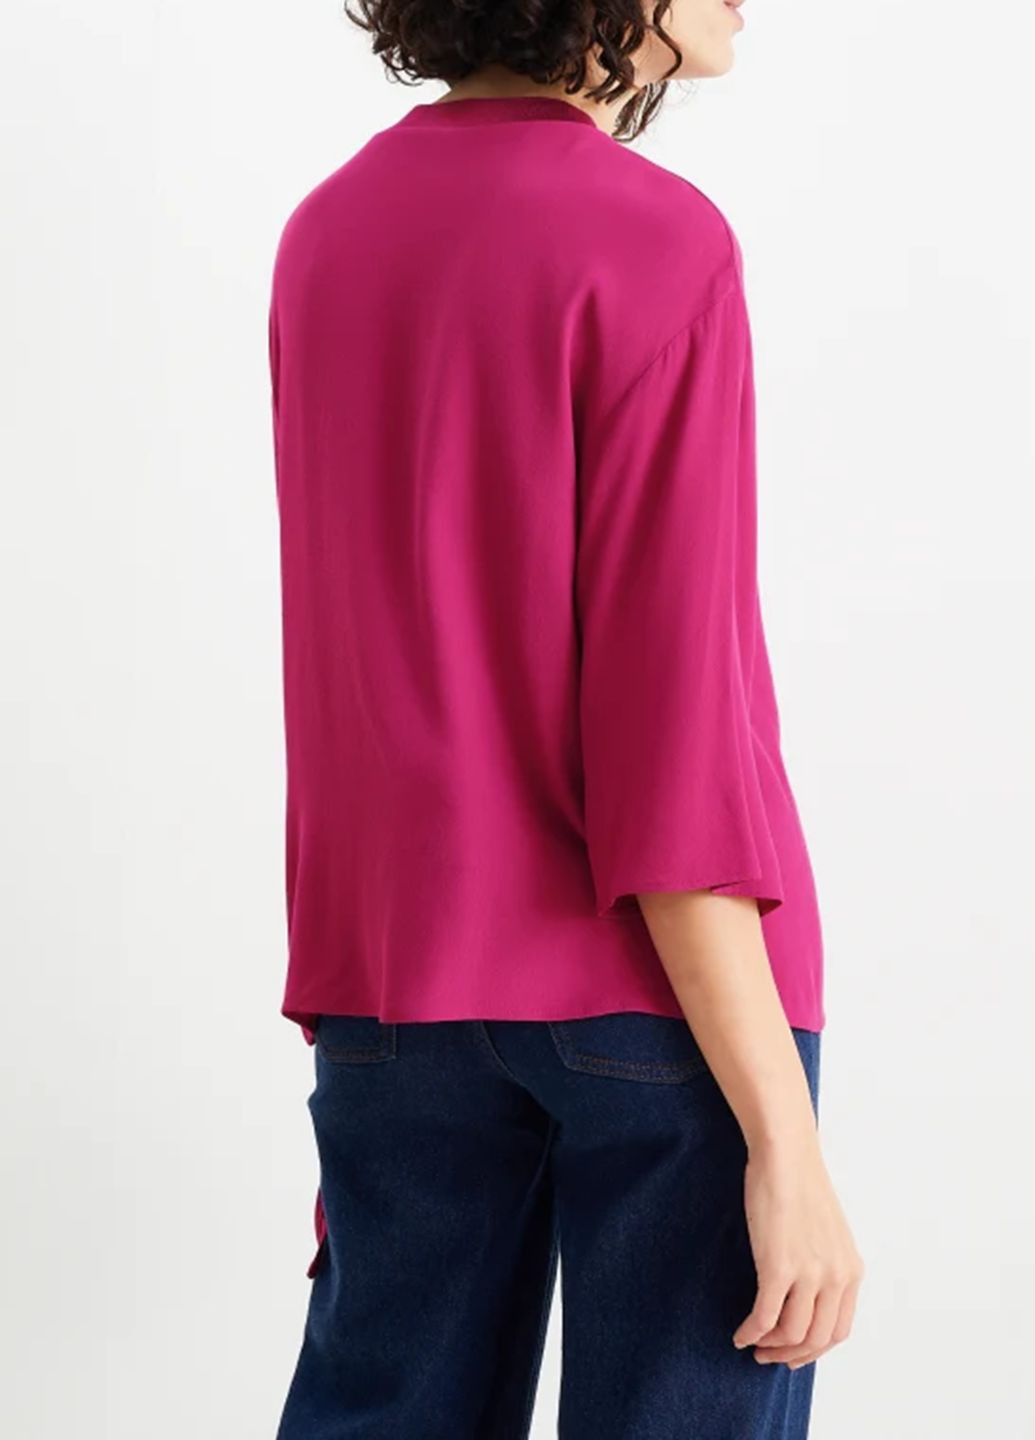 Фиолетовая блузка C&A